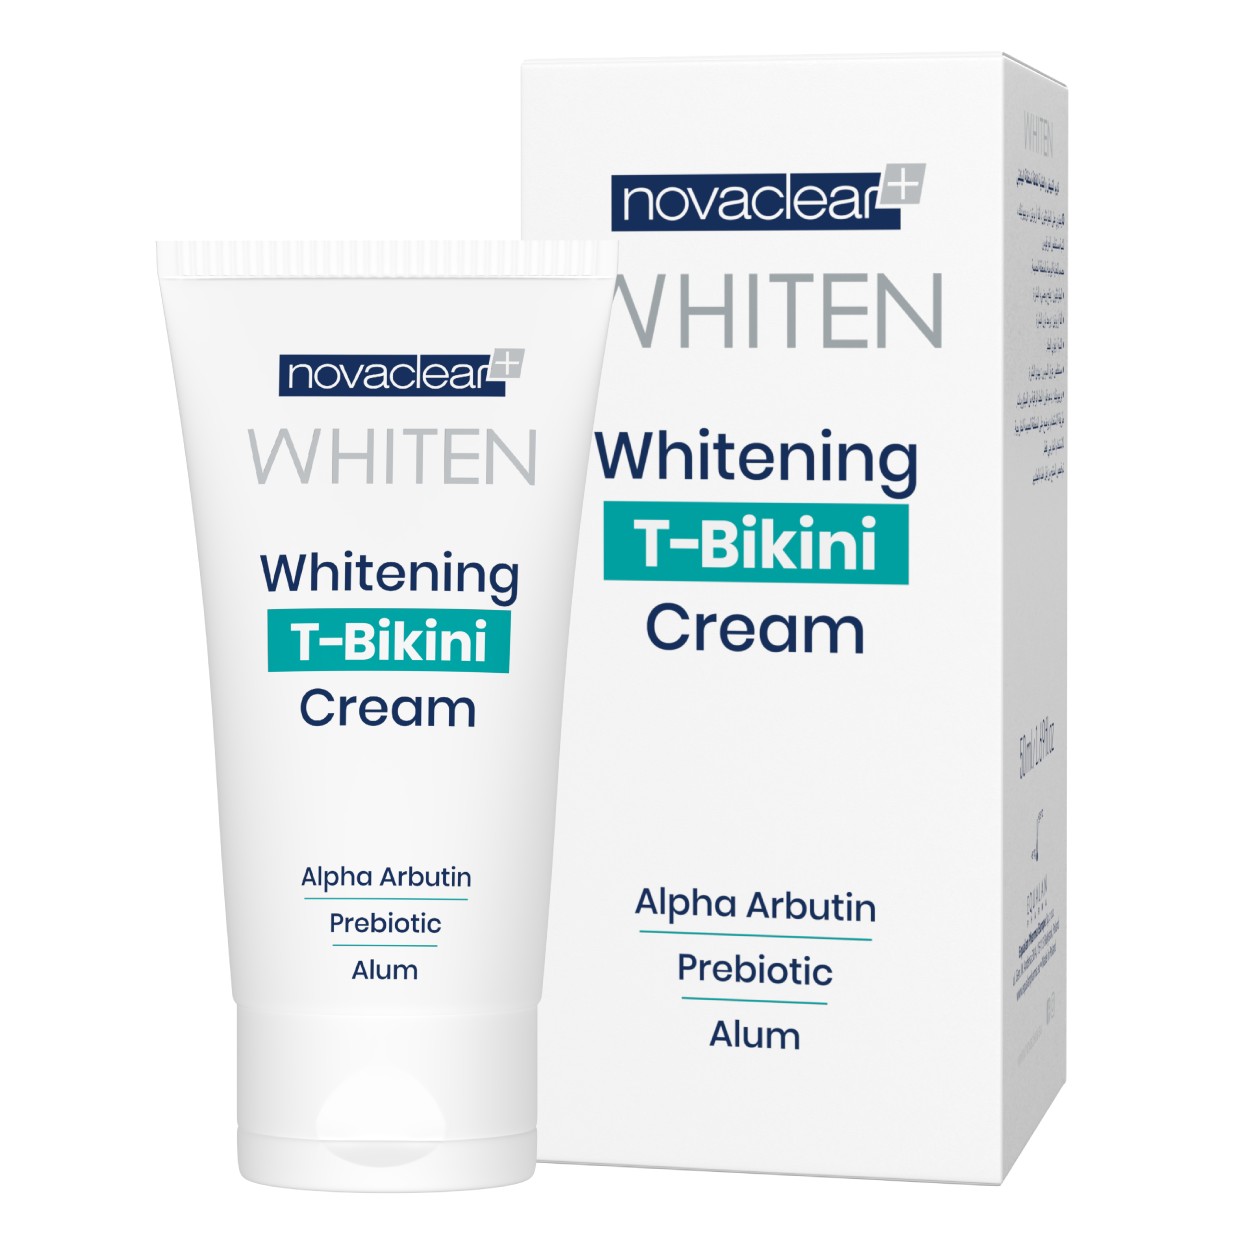 novaclear-whiten-whitening-t-bikini-cream